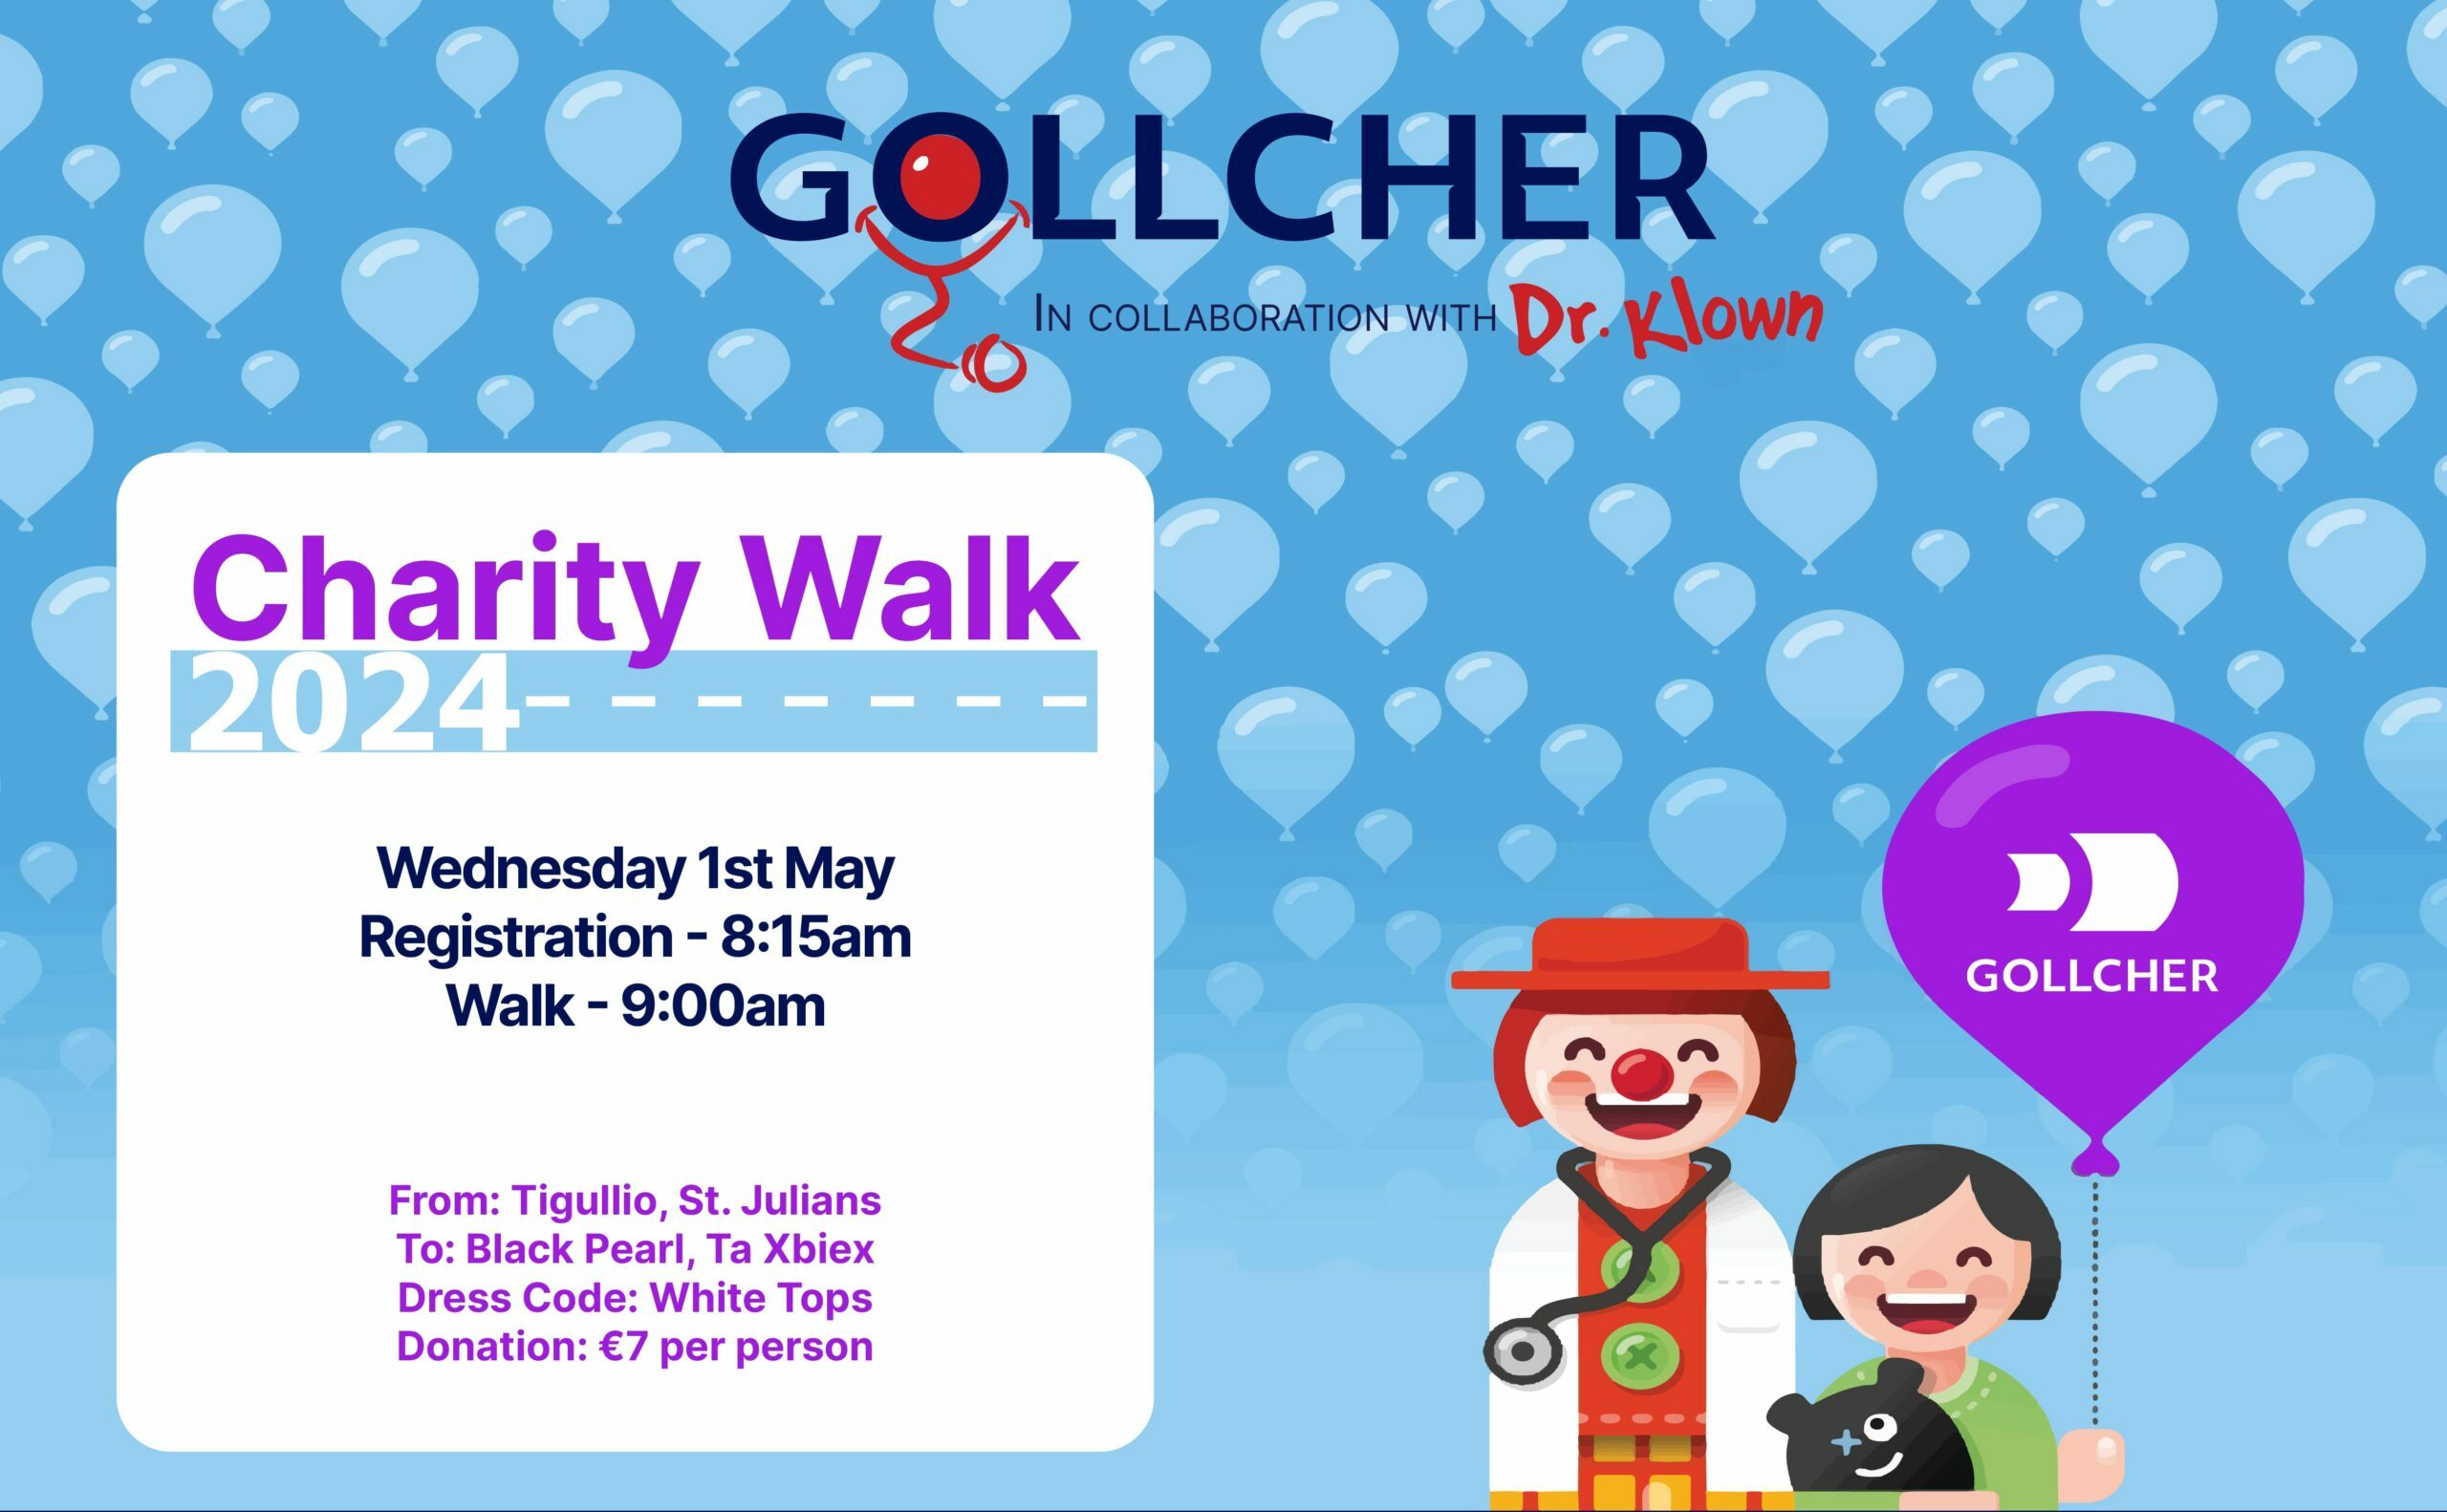 Gollcher Charity Walk in aid of Dr Klown